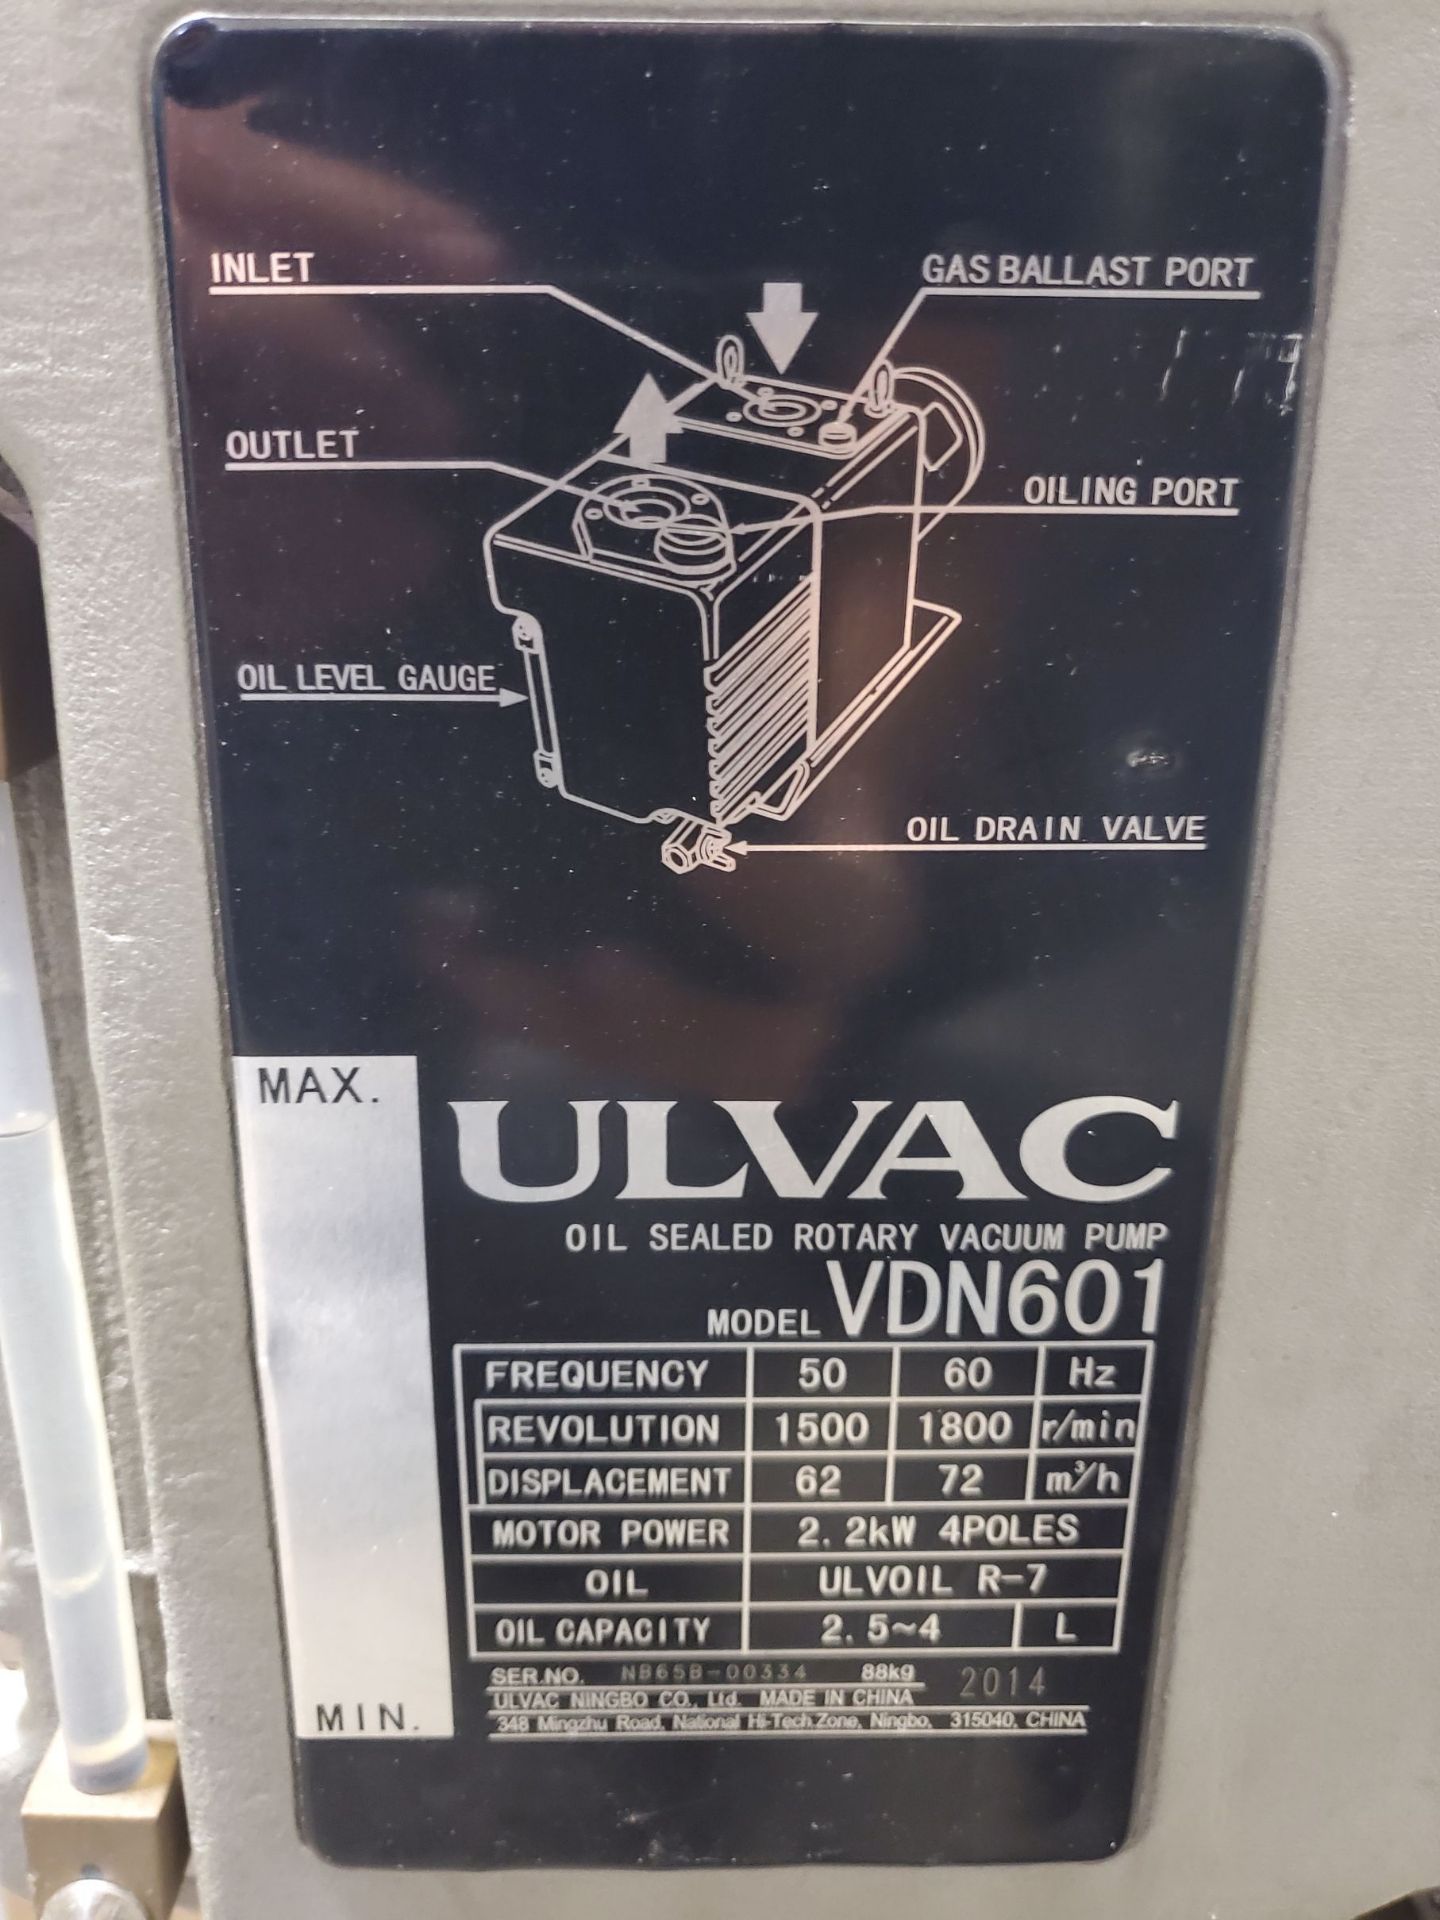 ULVAC Oil Sealed Rotary Vacuum Pump, Model VDN601 - Image 2 of 6